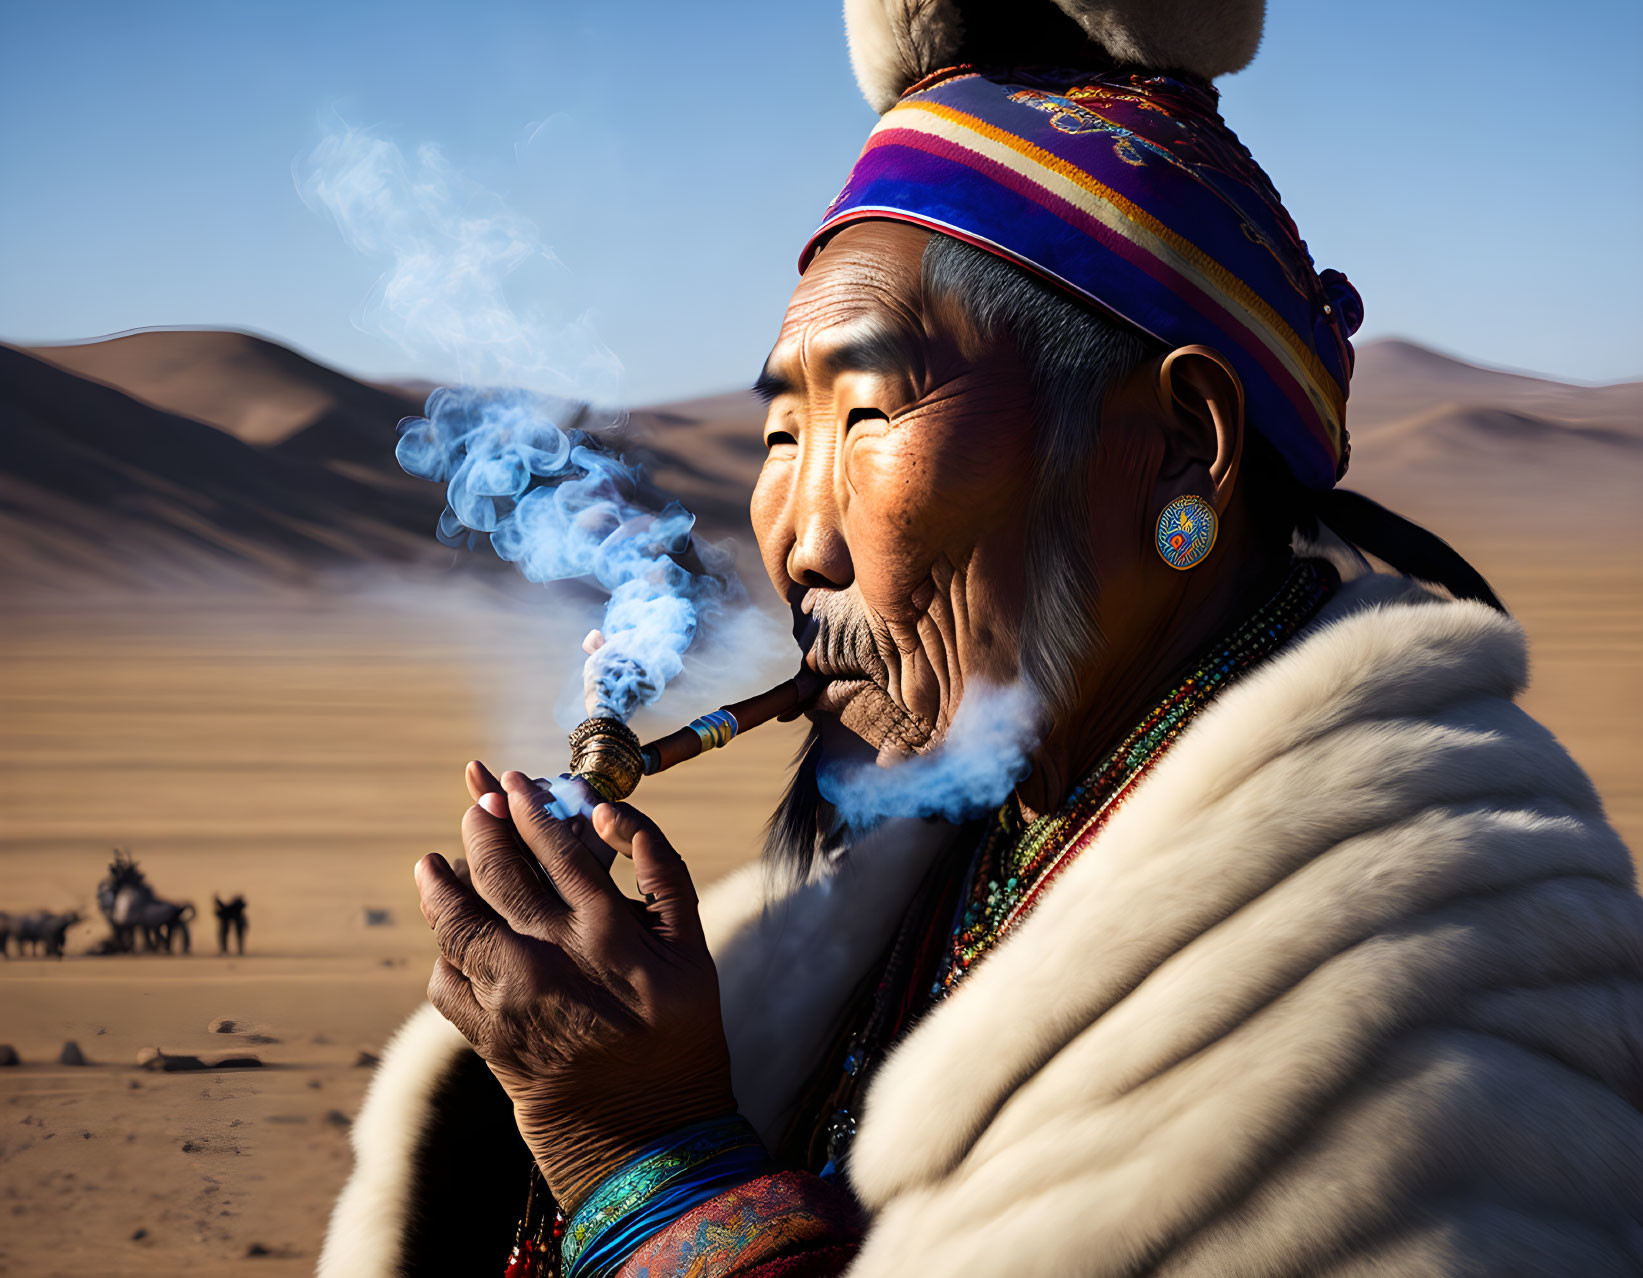 Elder in Colorful Traditional Attire Smoking Pipe with Camel Caravan